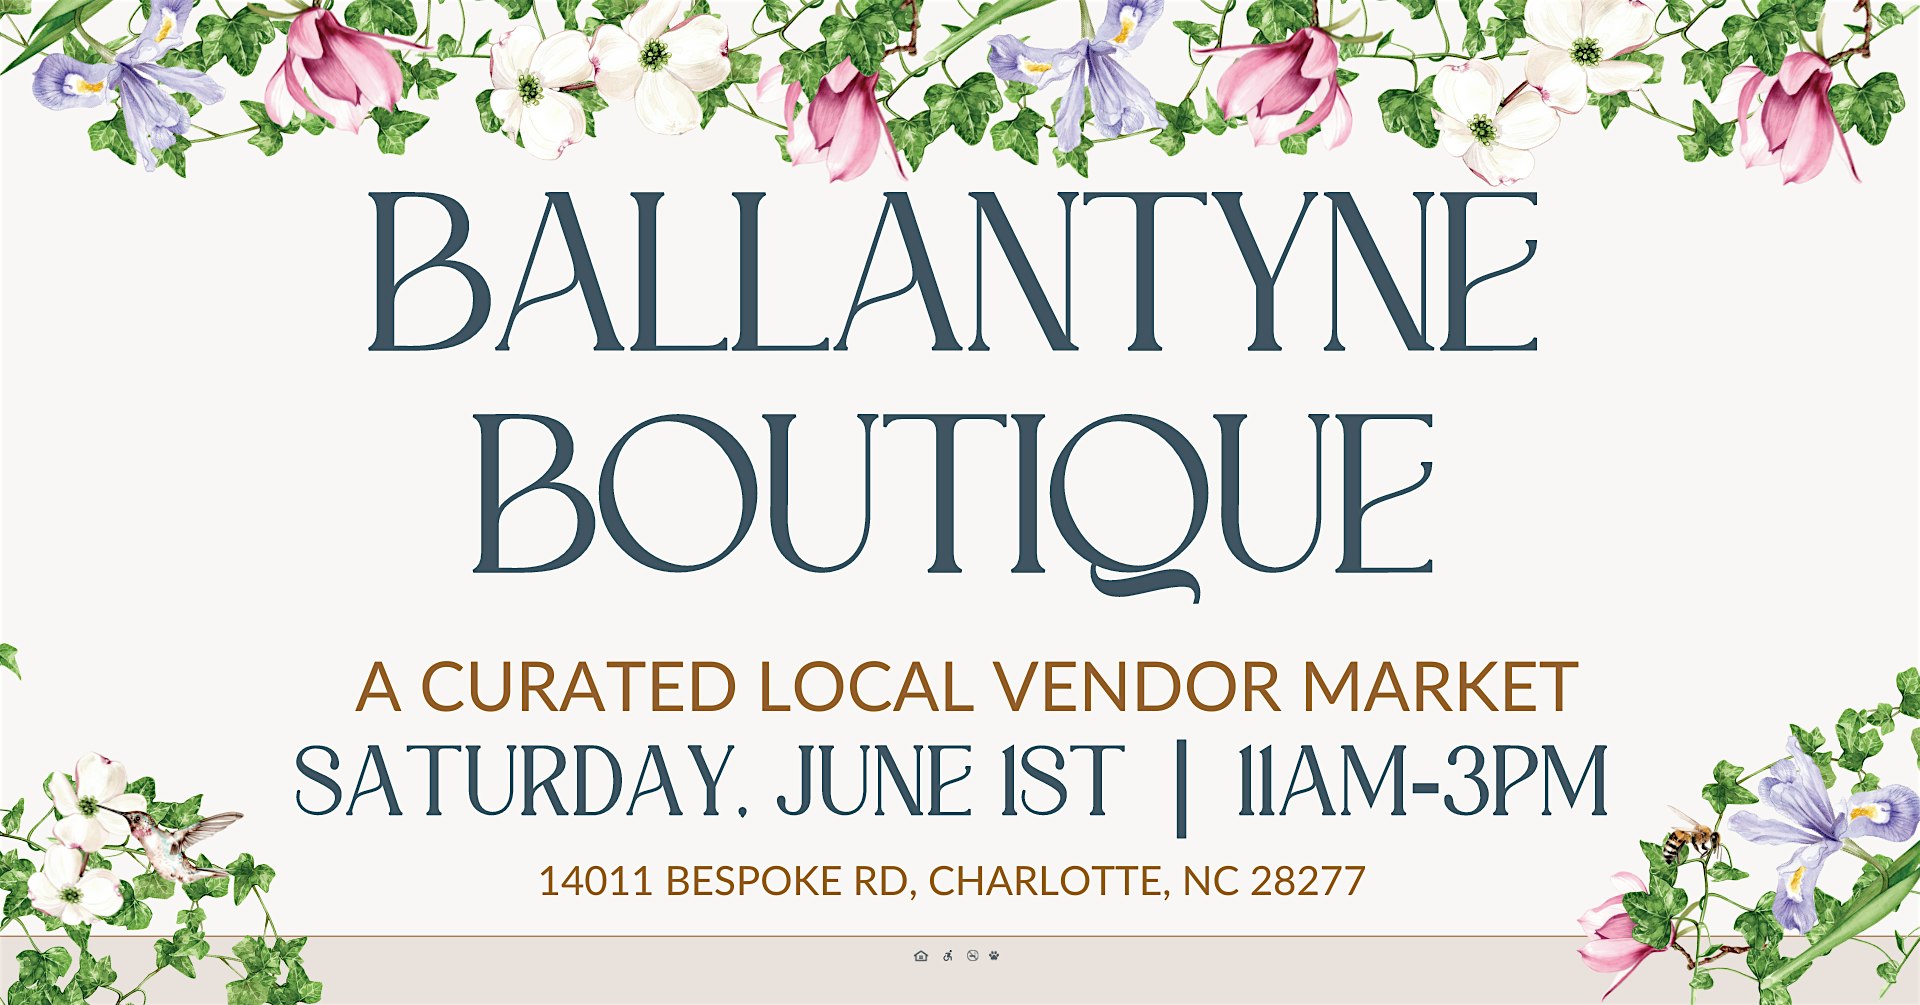 Ballantyne Boutique - Local Vendor Market & Live Music